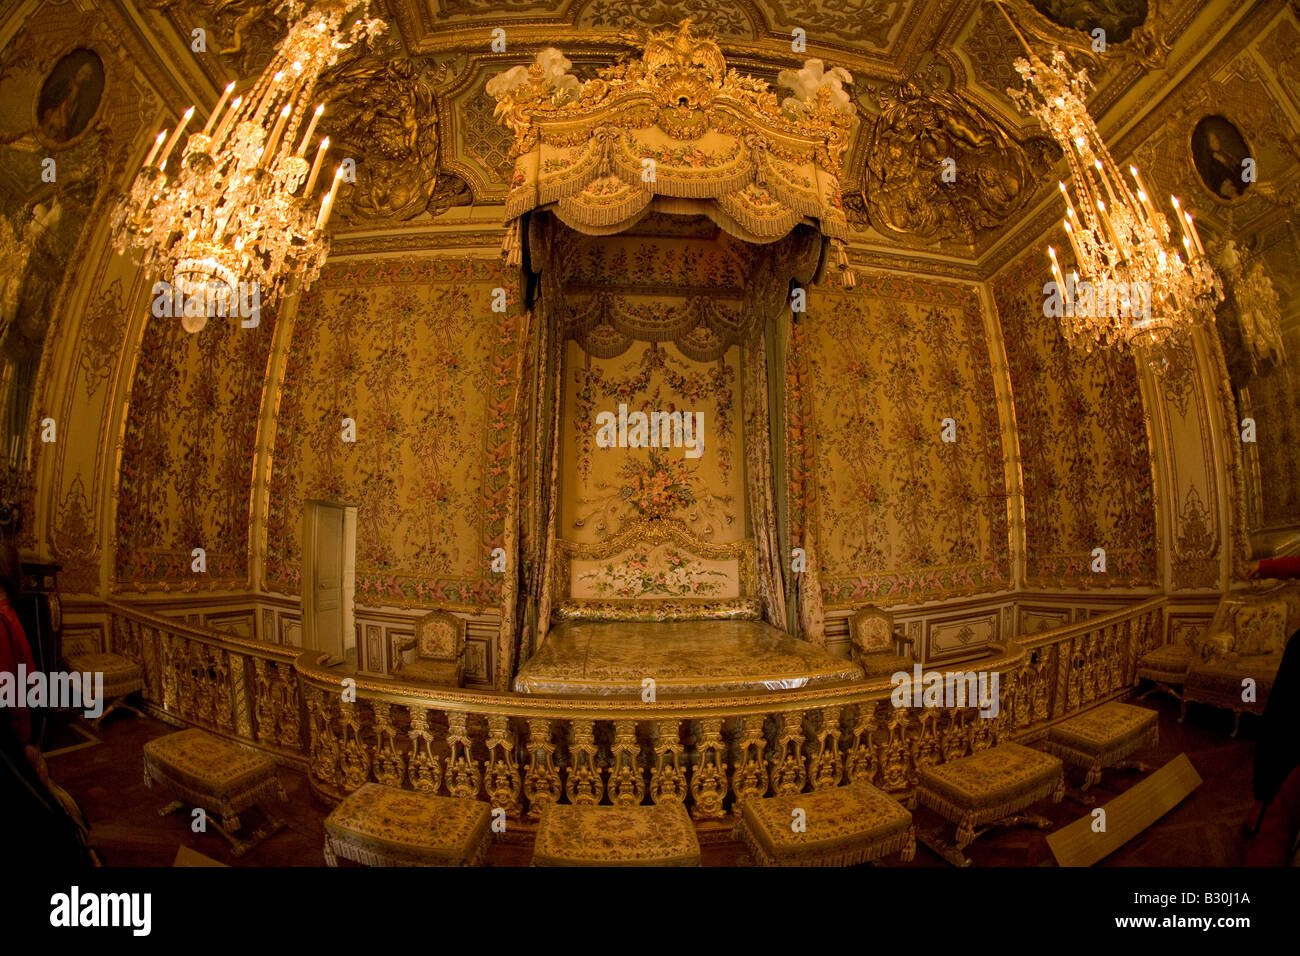 Queens Bedchamber Suite interior Chateau of Versailles near Paris France Europe EU Stock Photo